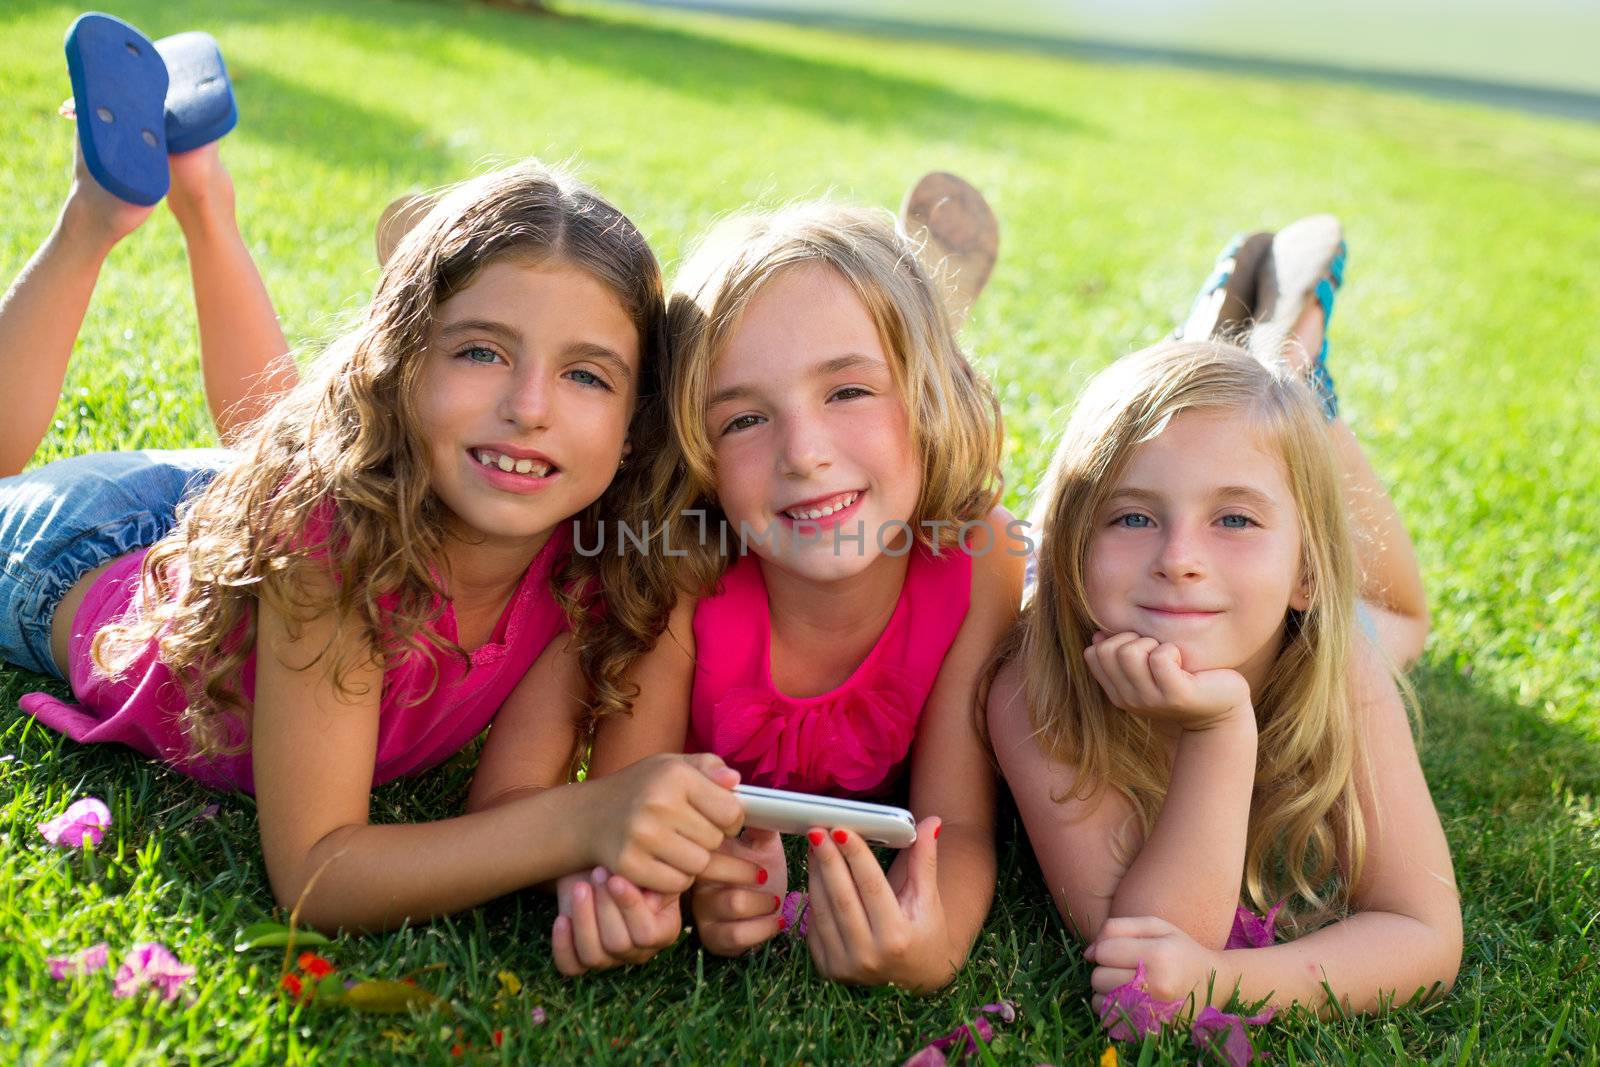 children friend girls playing internet with smartphone by lunamarina